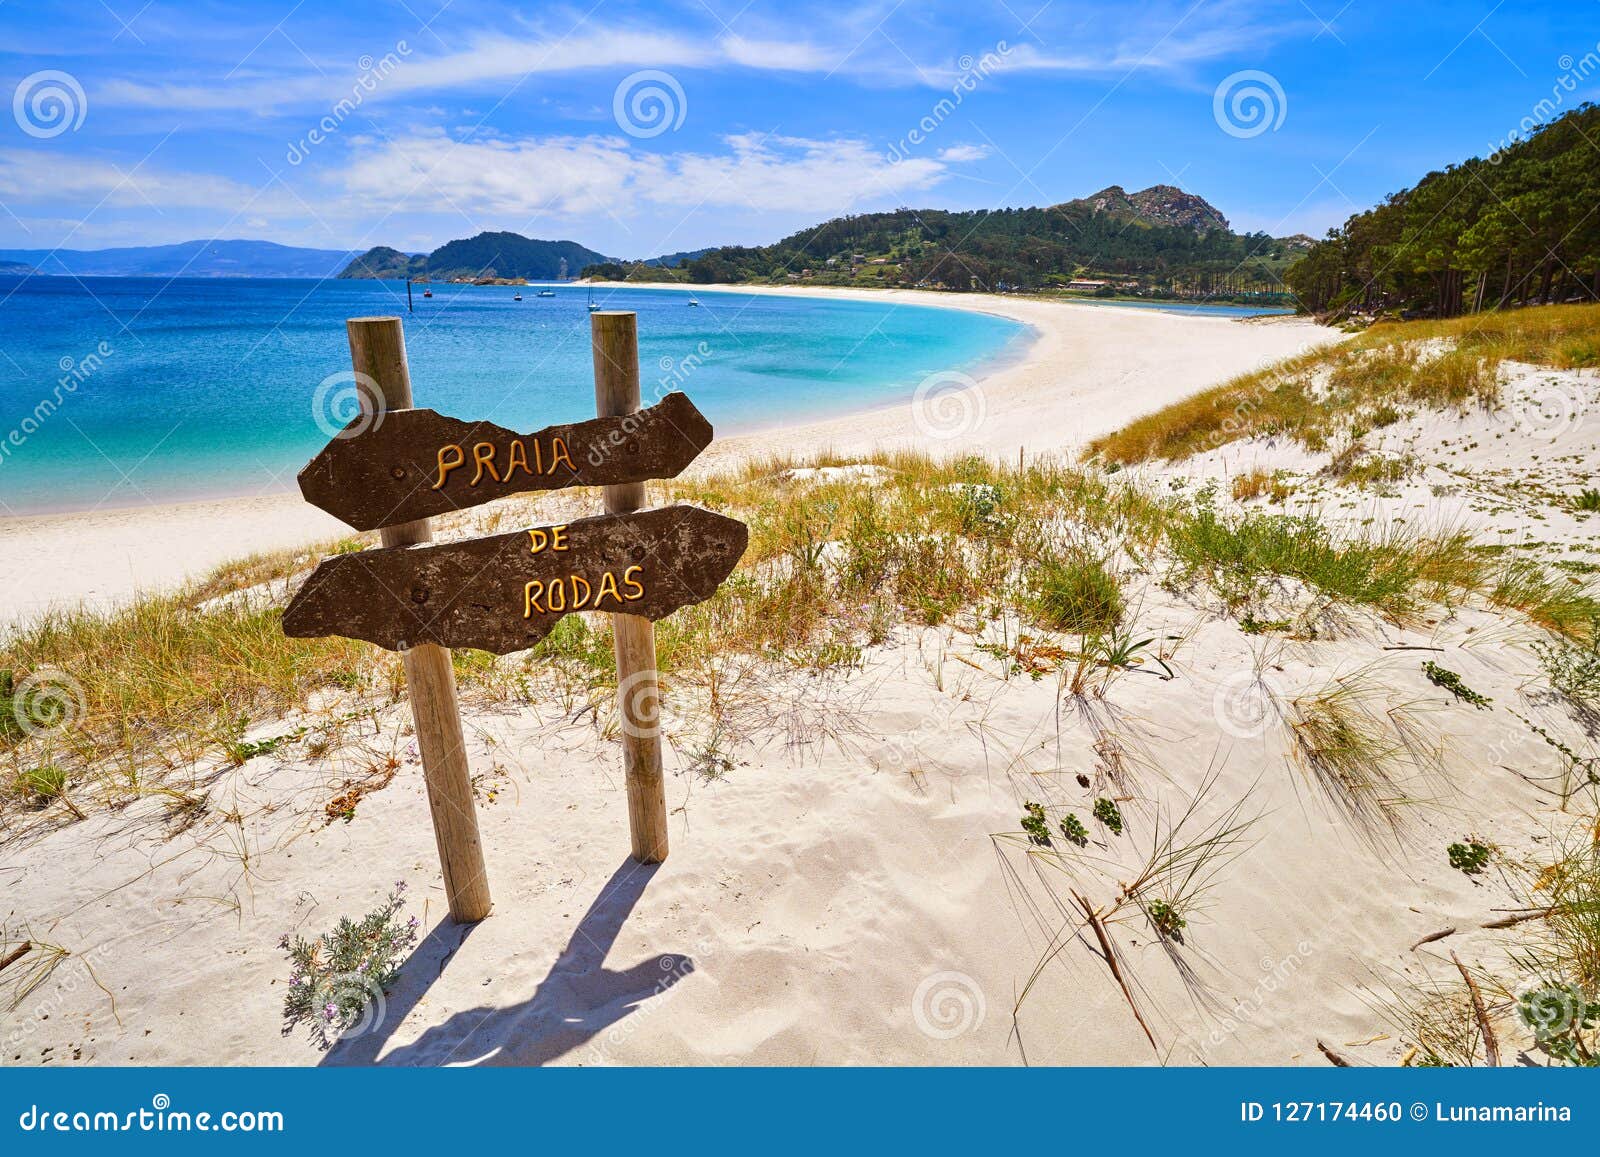 praia de rodas beach sign in islas cies island vigo